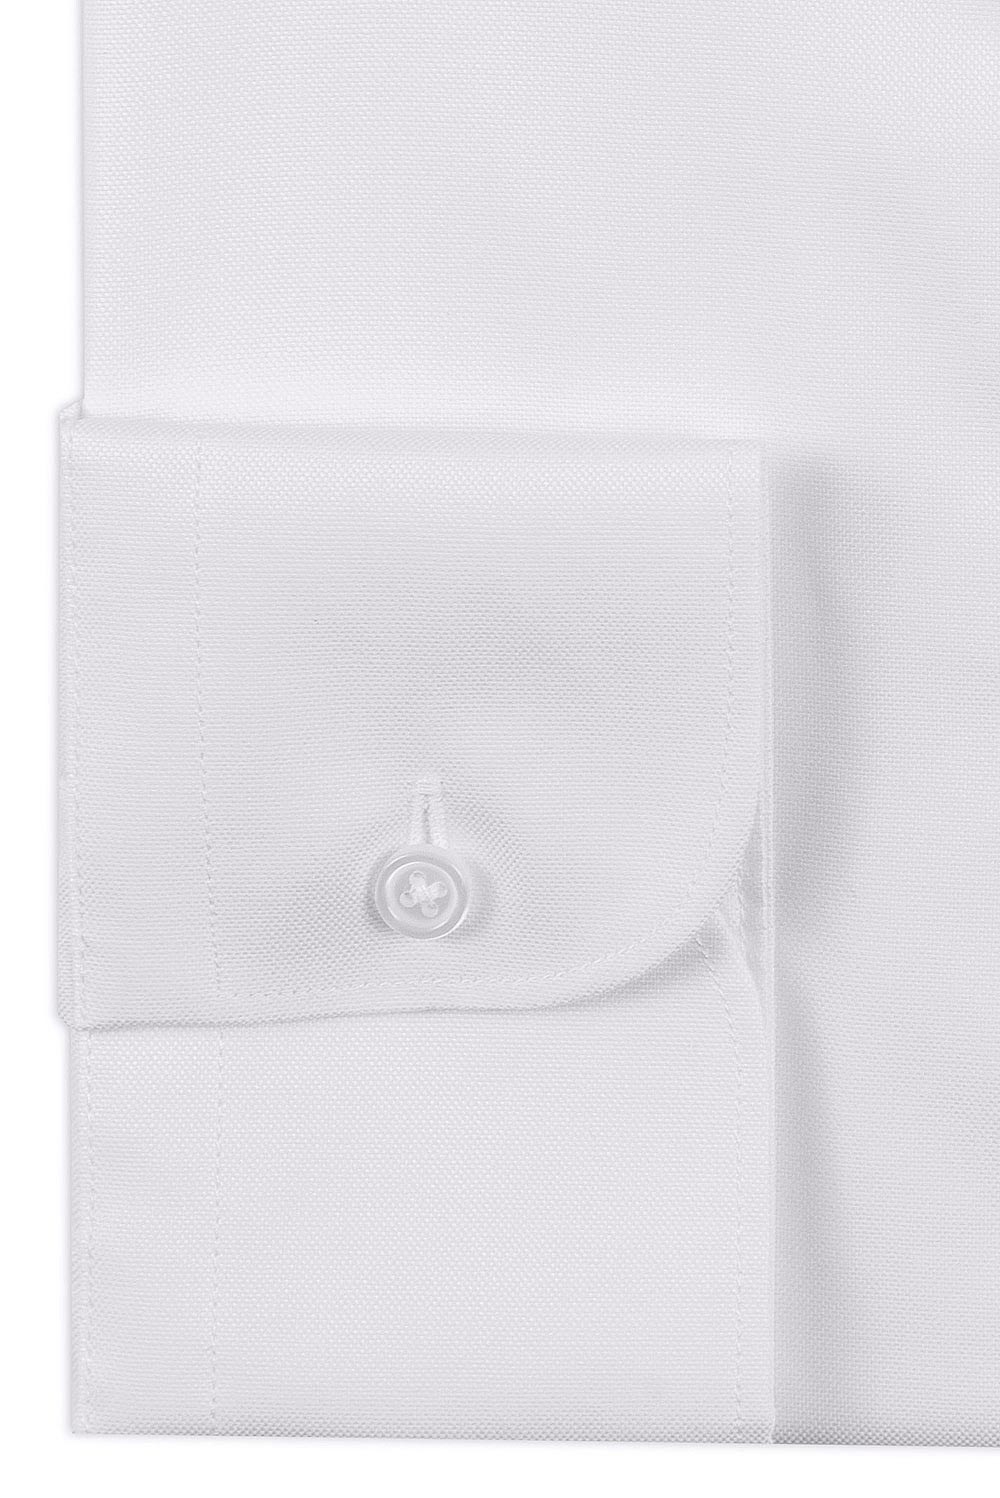 Superslim white plain shirt 2